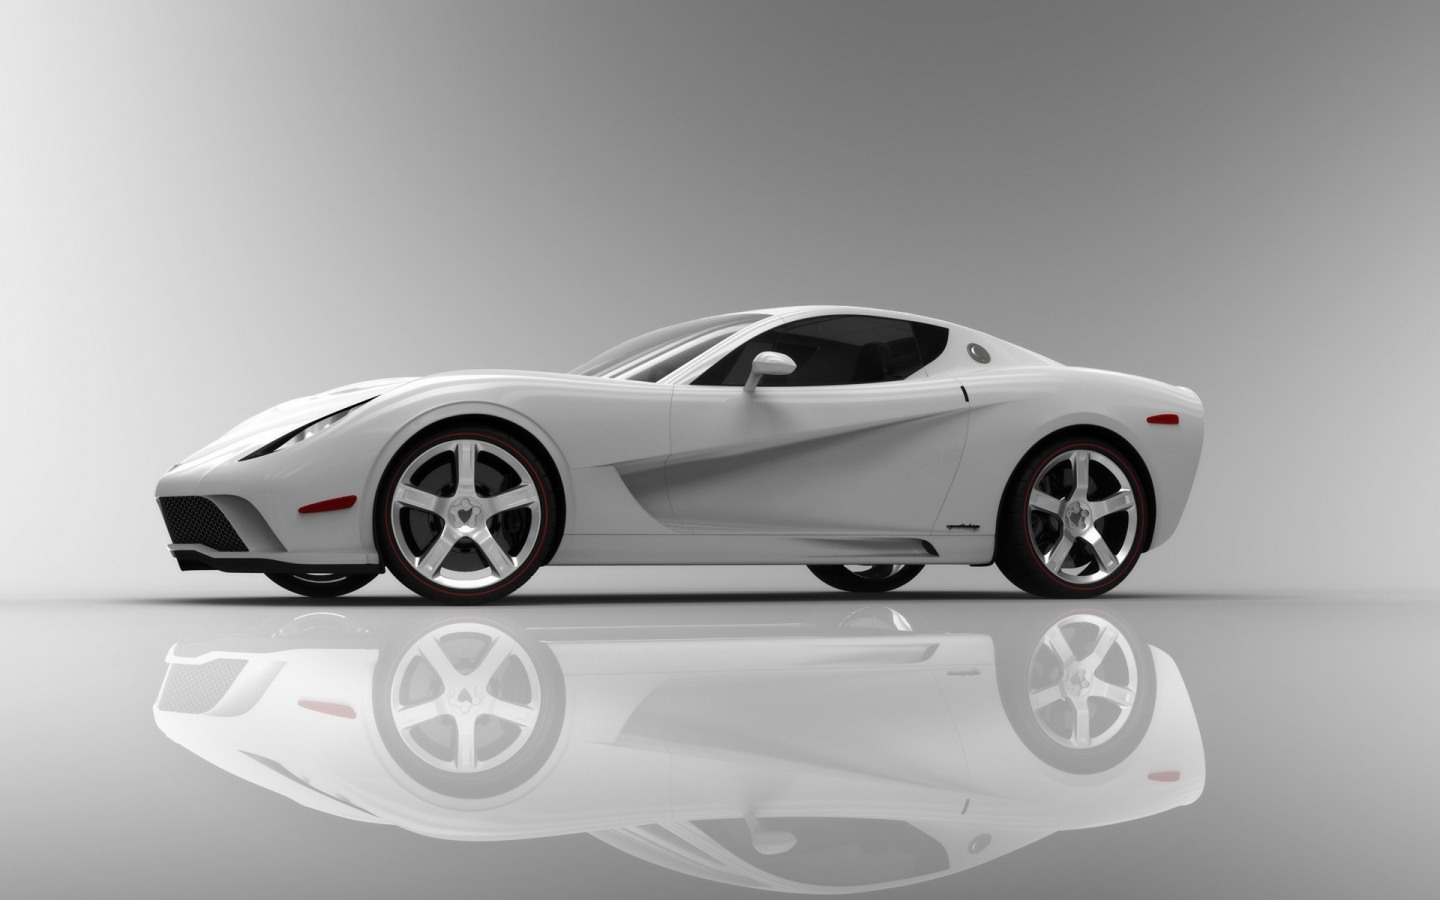 Mallett Corvette Z03 2009 White Front Angle for 1440 x 900 widescreen resolution